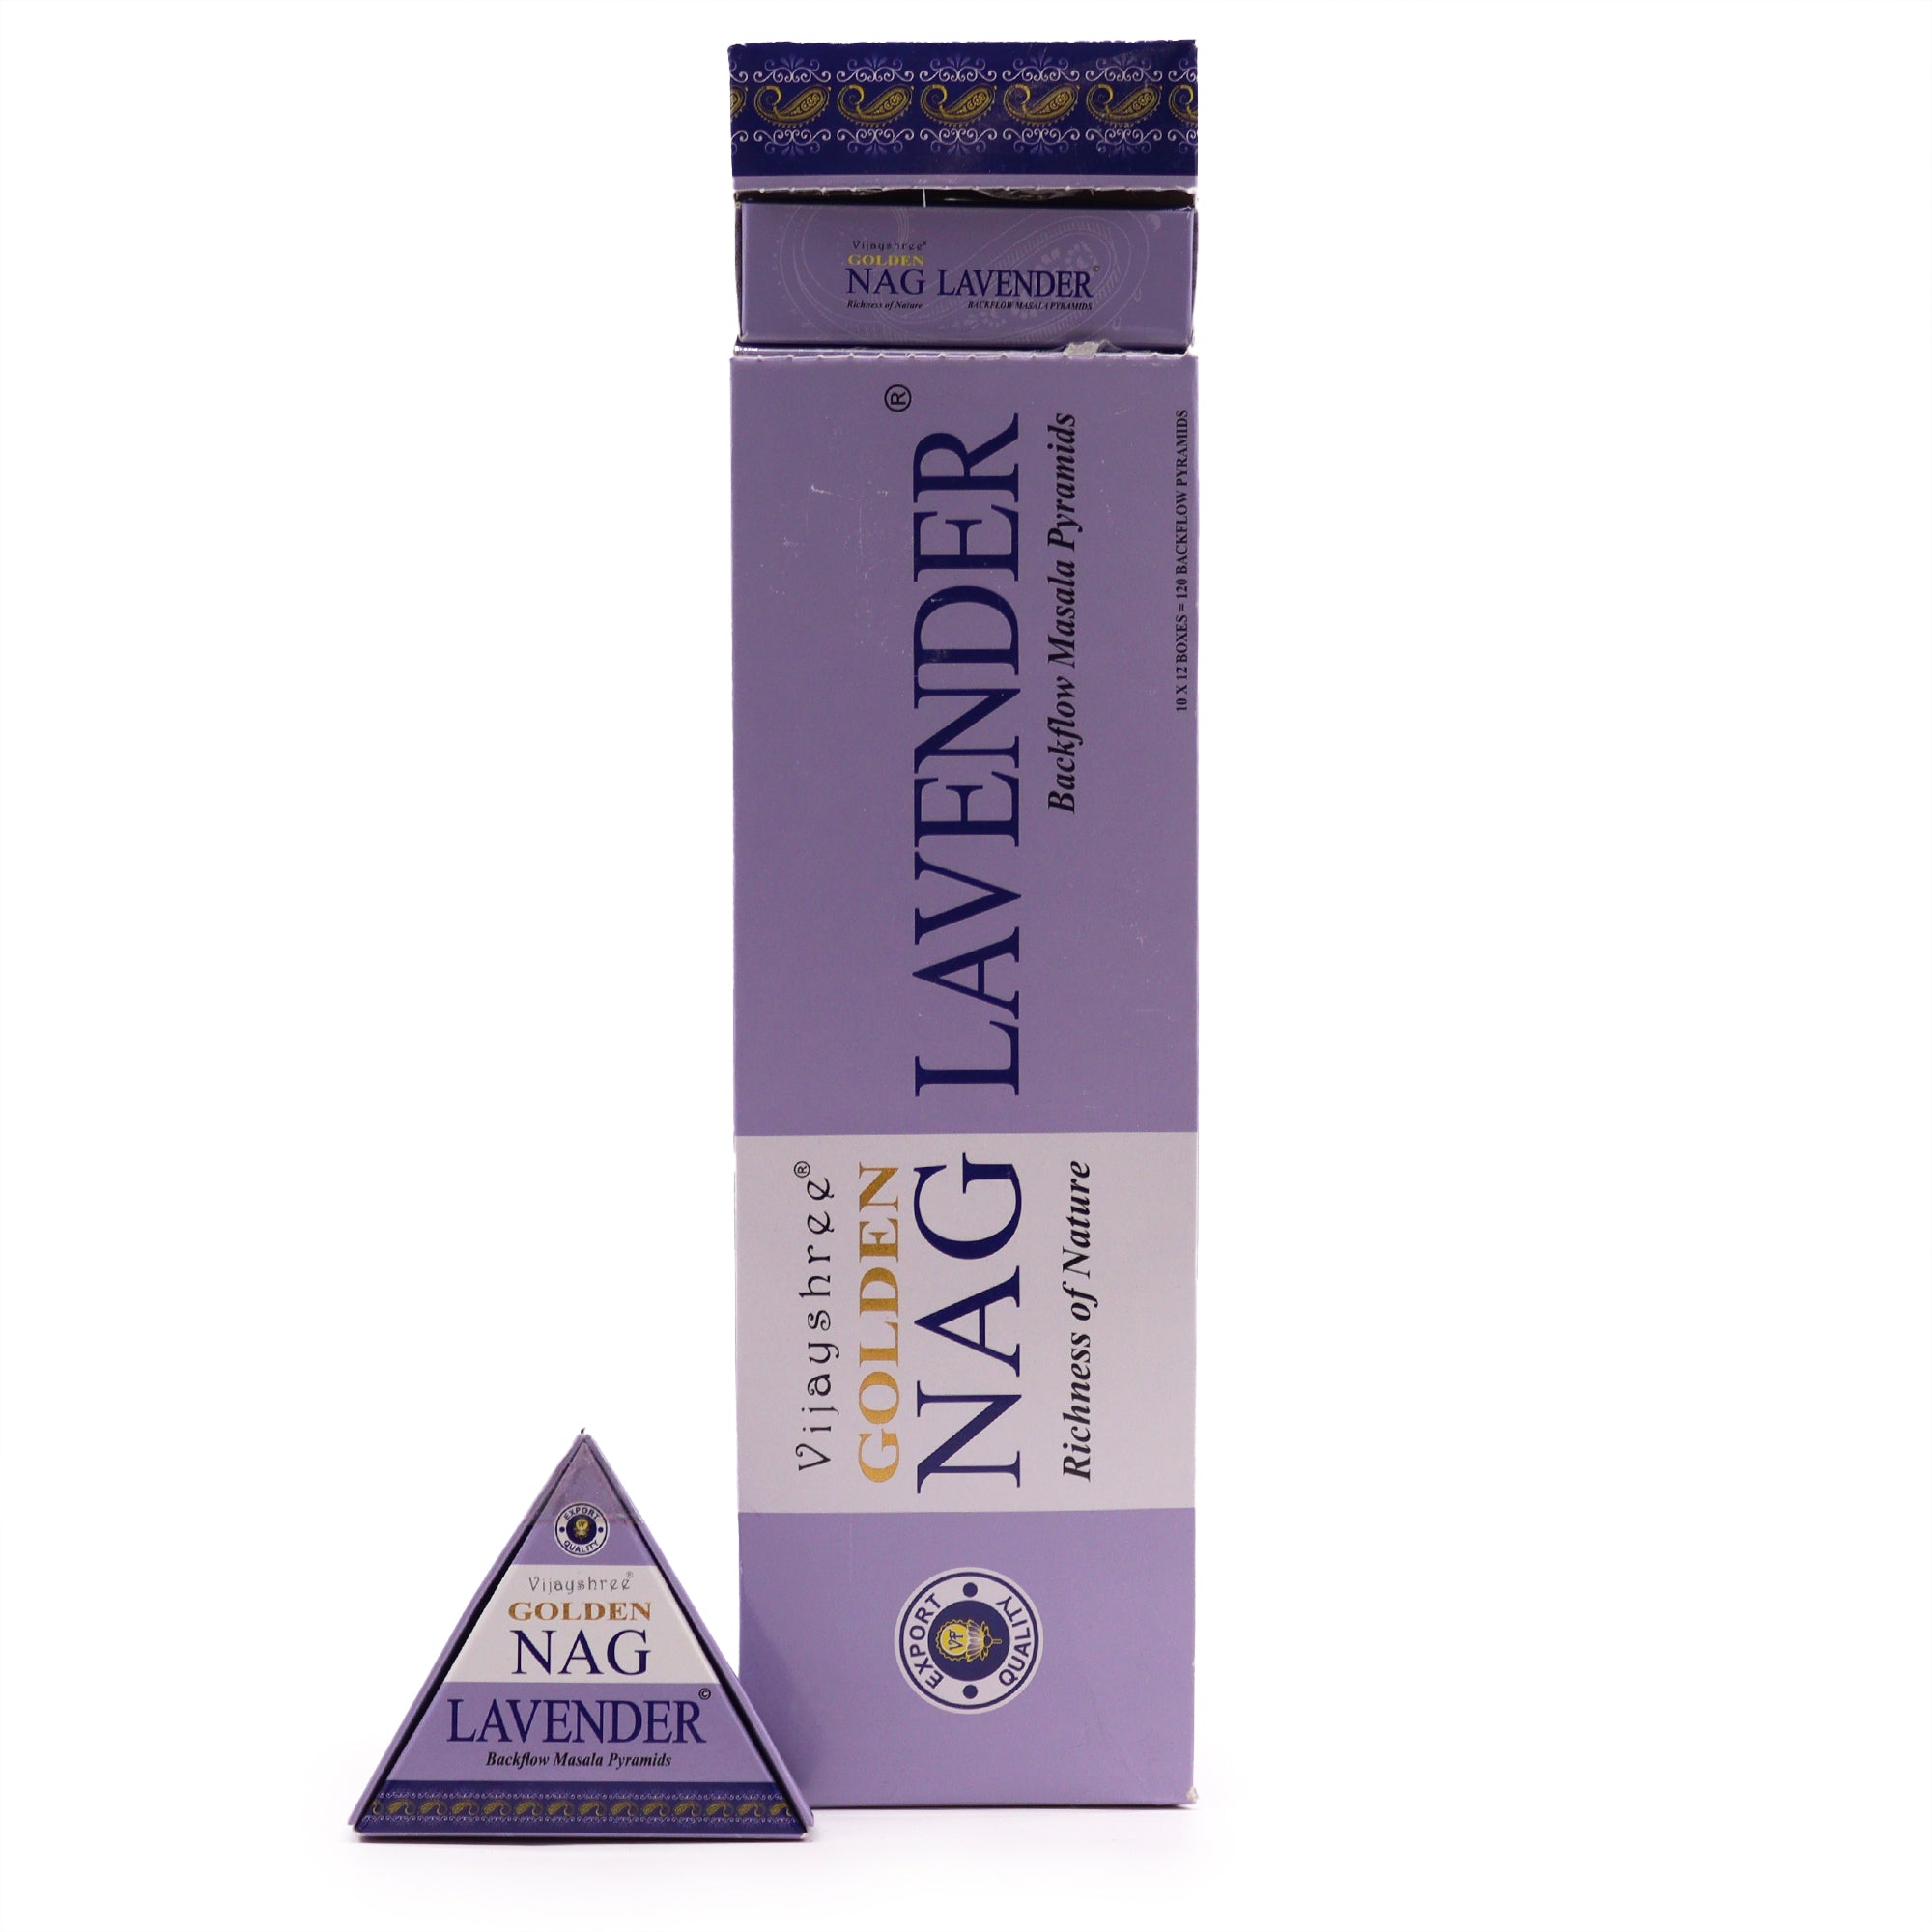 View 42g Jumbo Golden Nag Lavender Backflow Incense Cones information